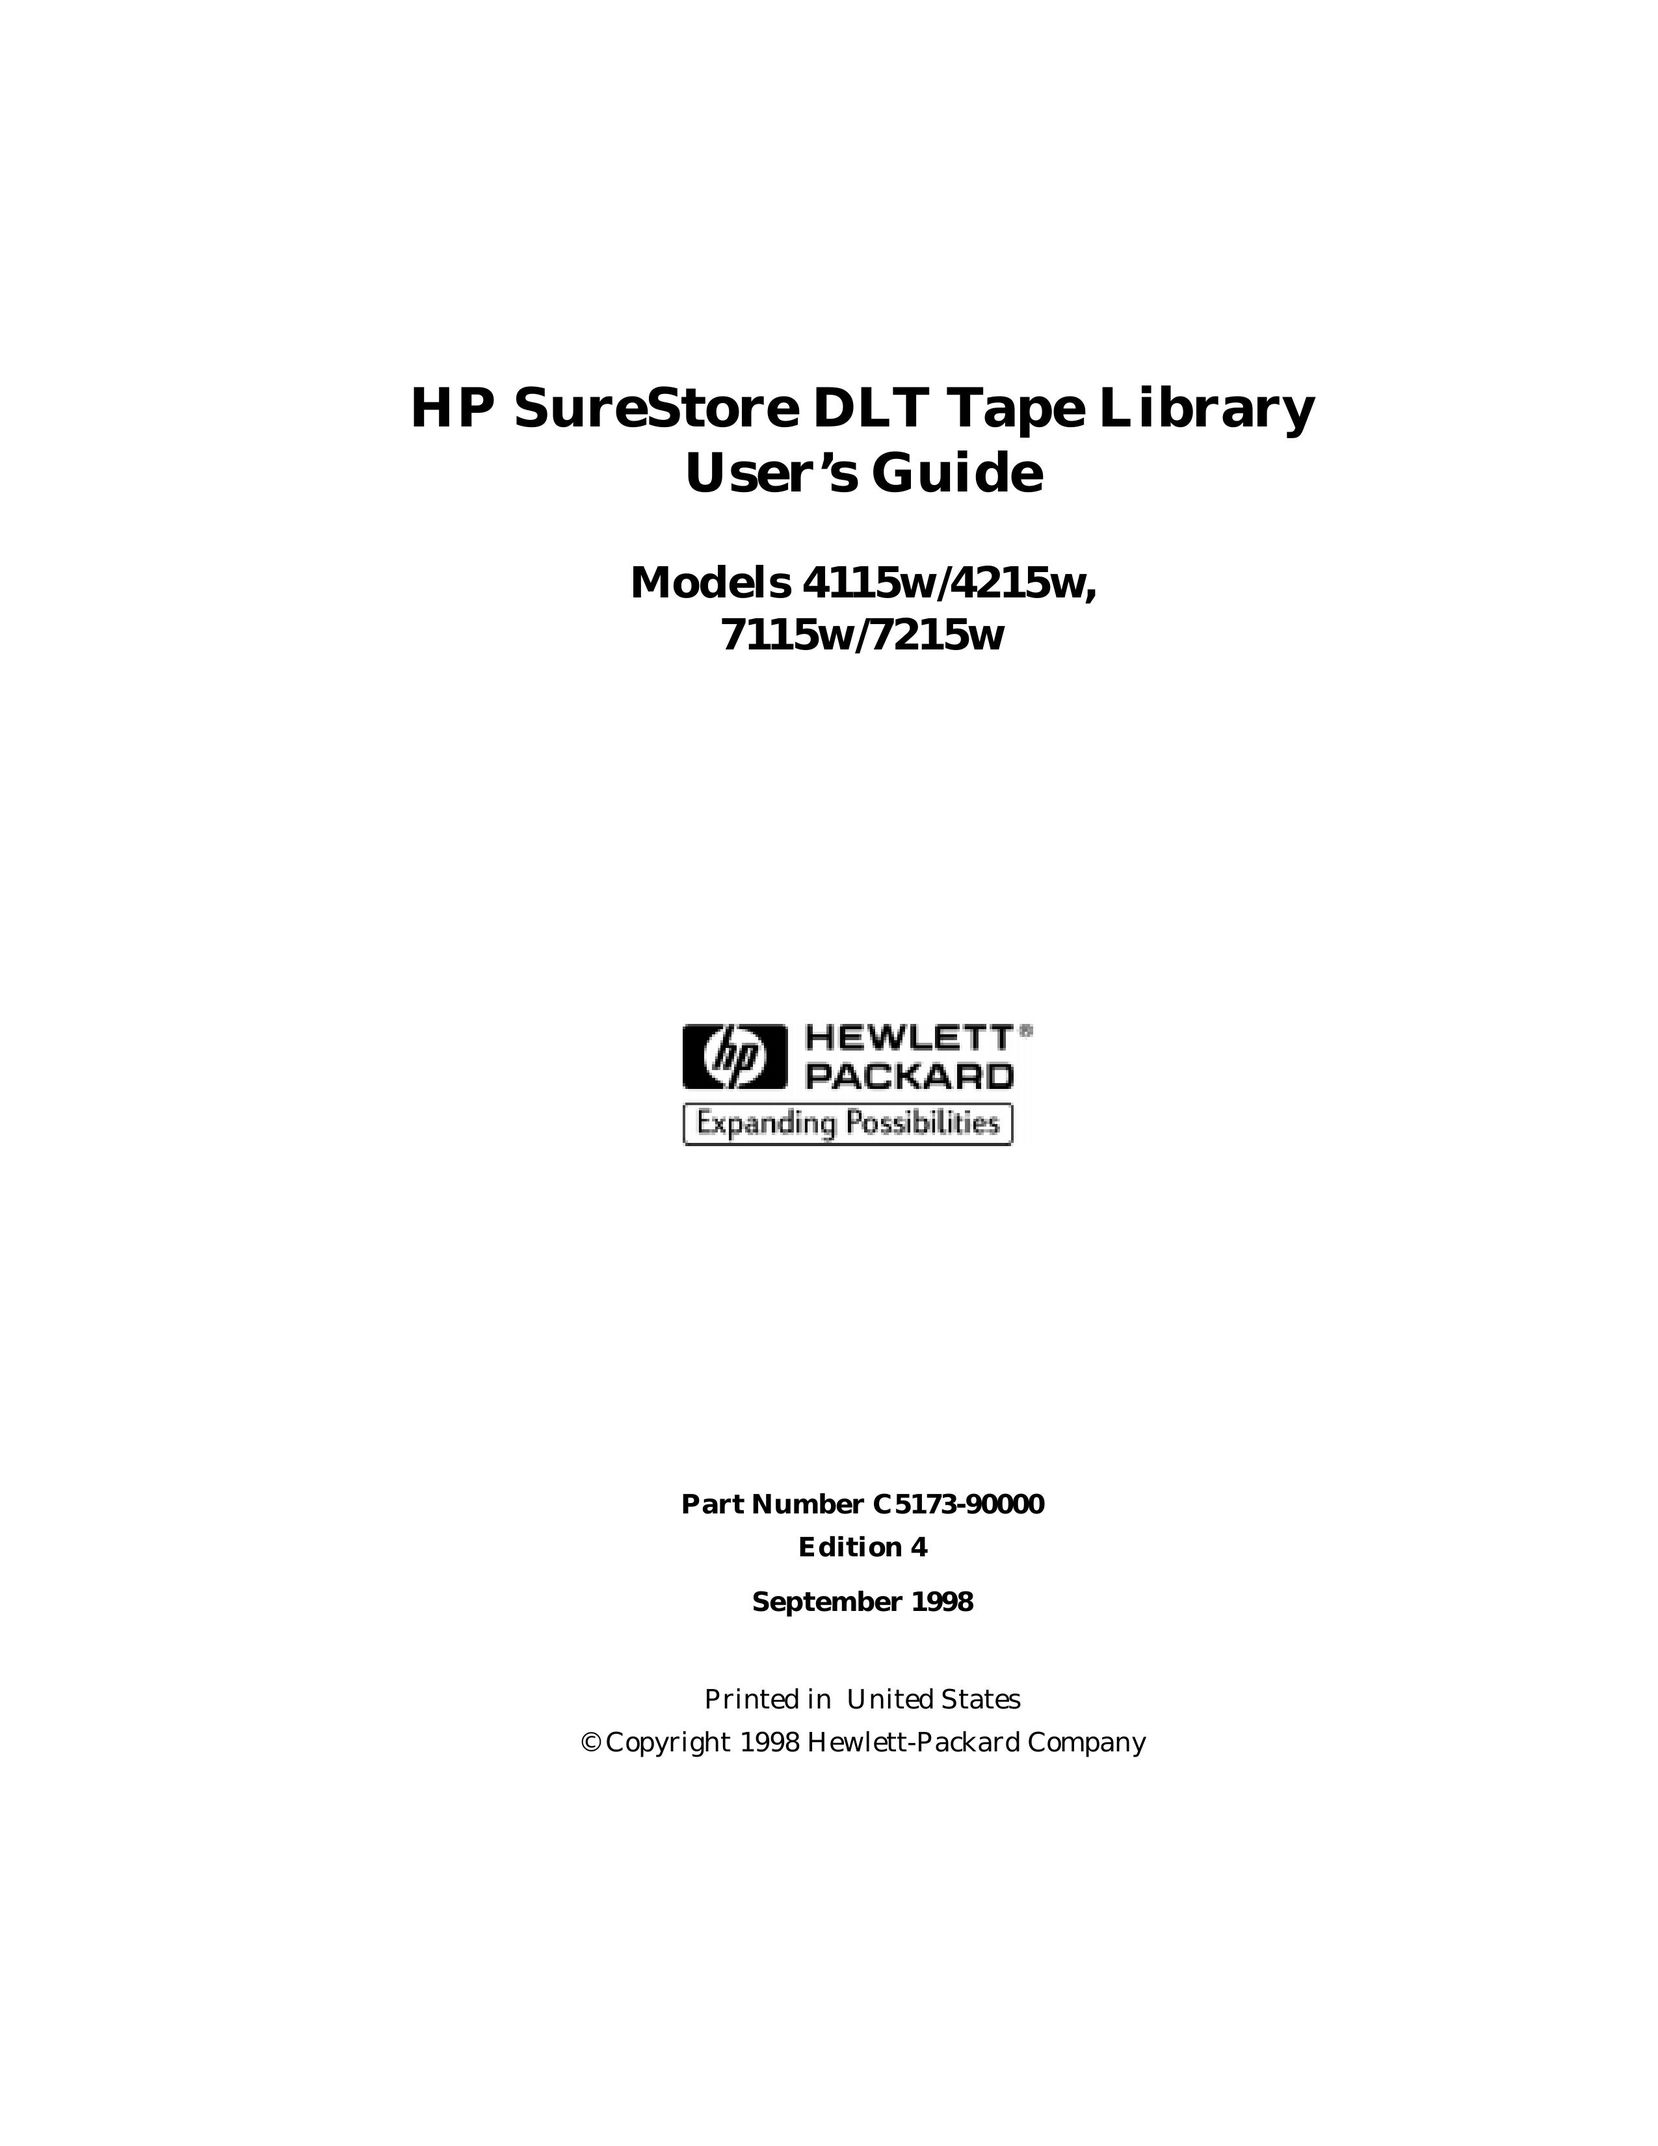 HP (Hewlett-Packard) 7215w Computer Drive User Manual